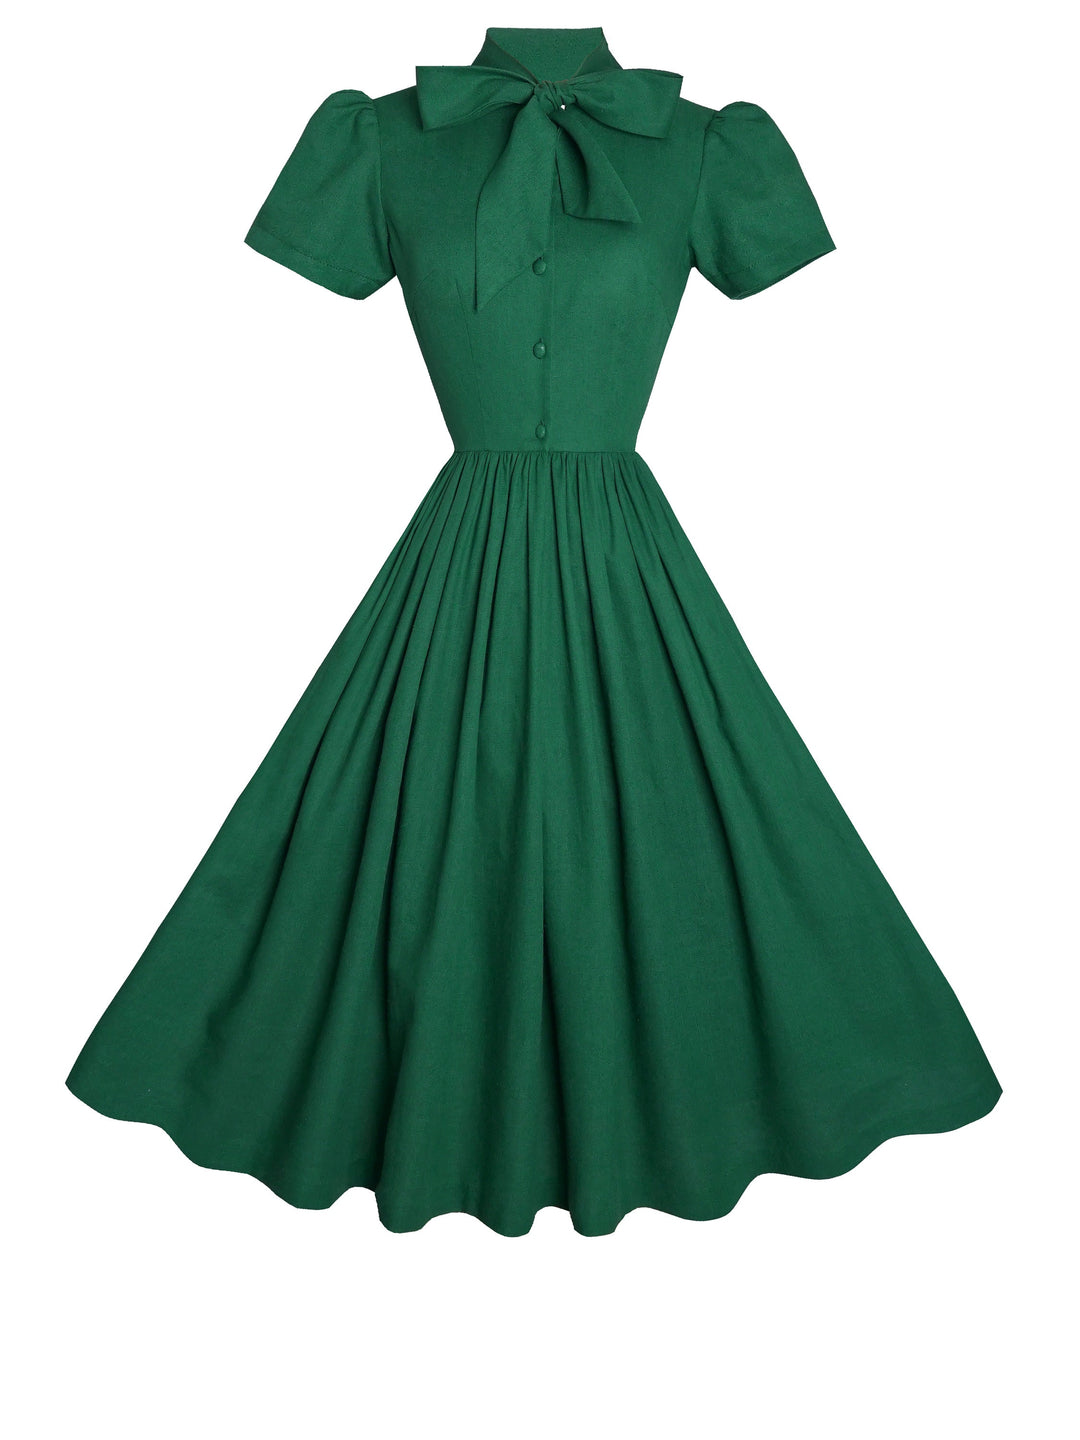 MTO - Bonnie Dress in Forest Green Linen